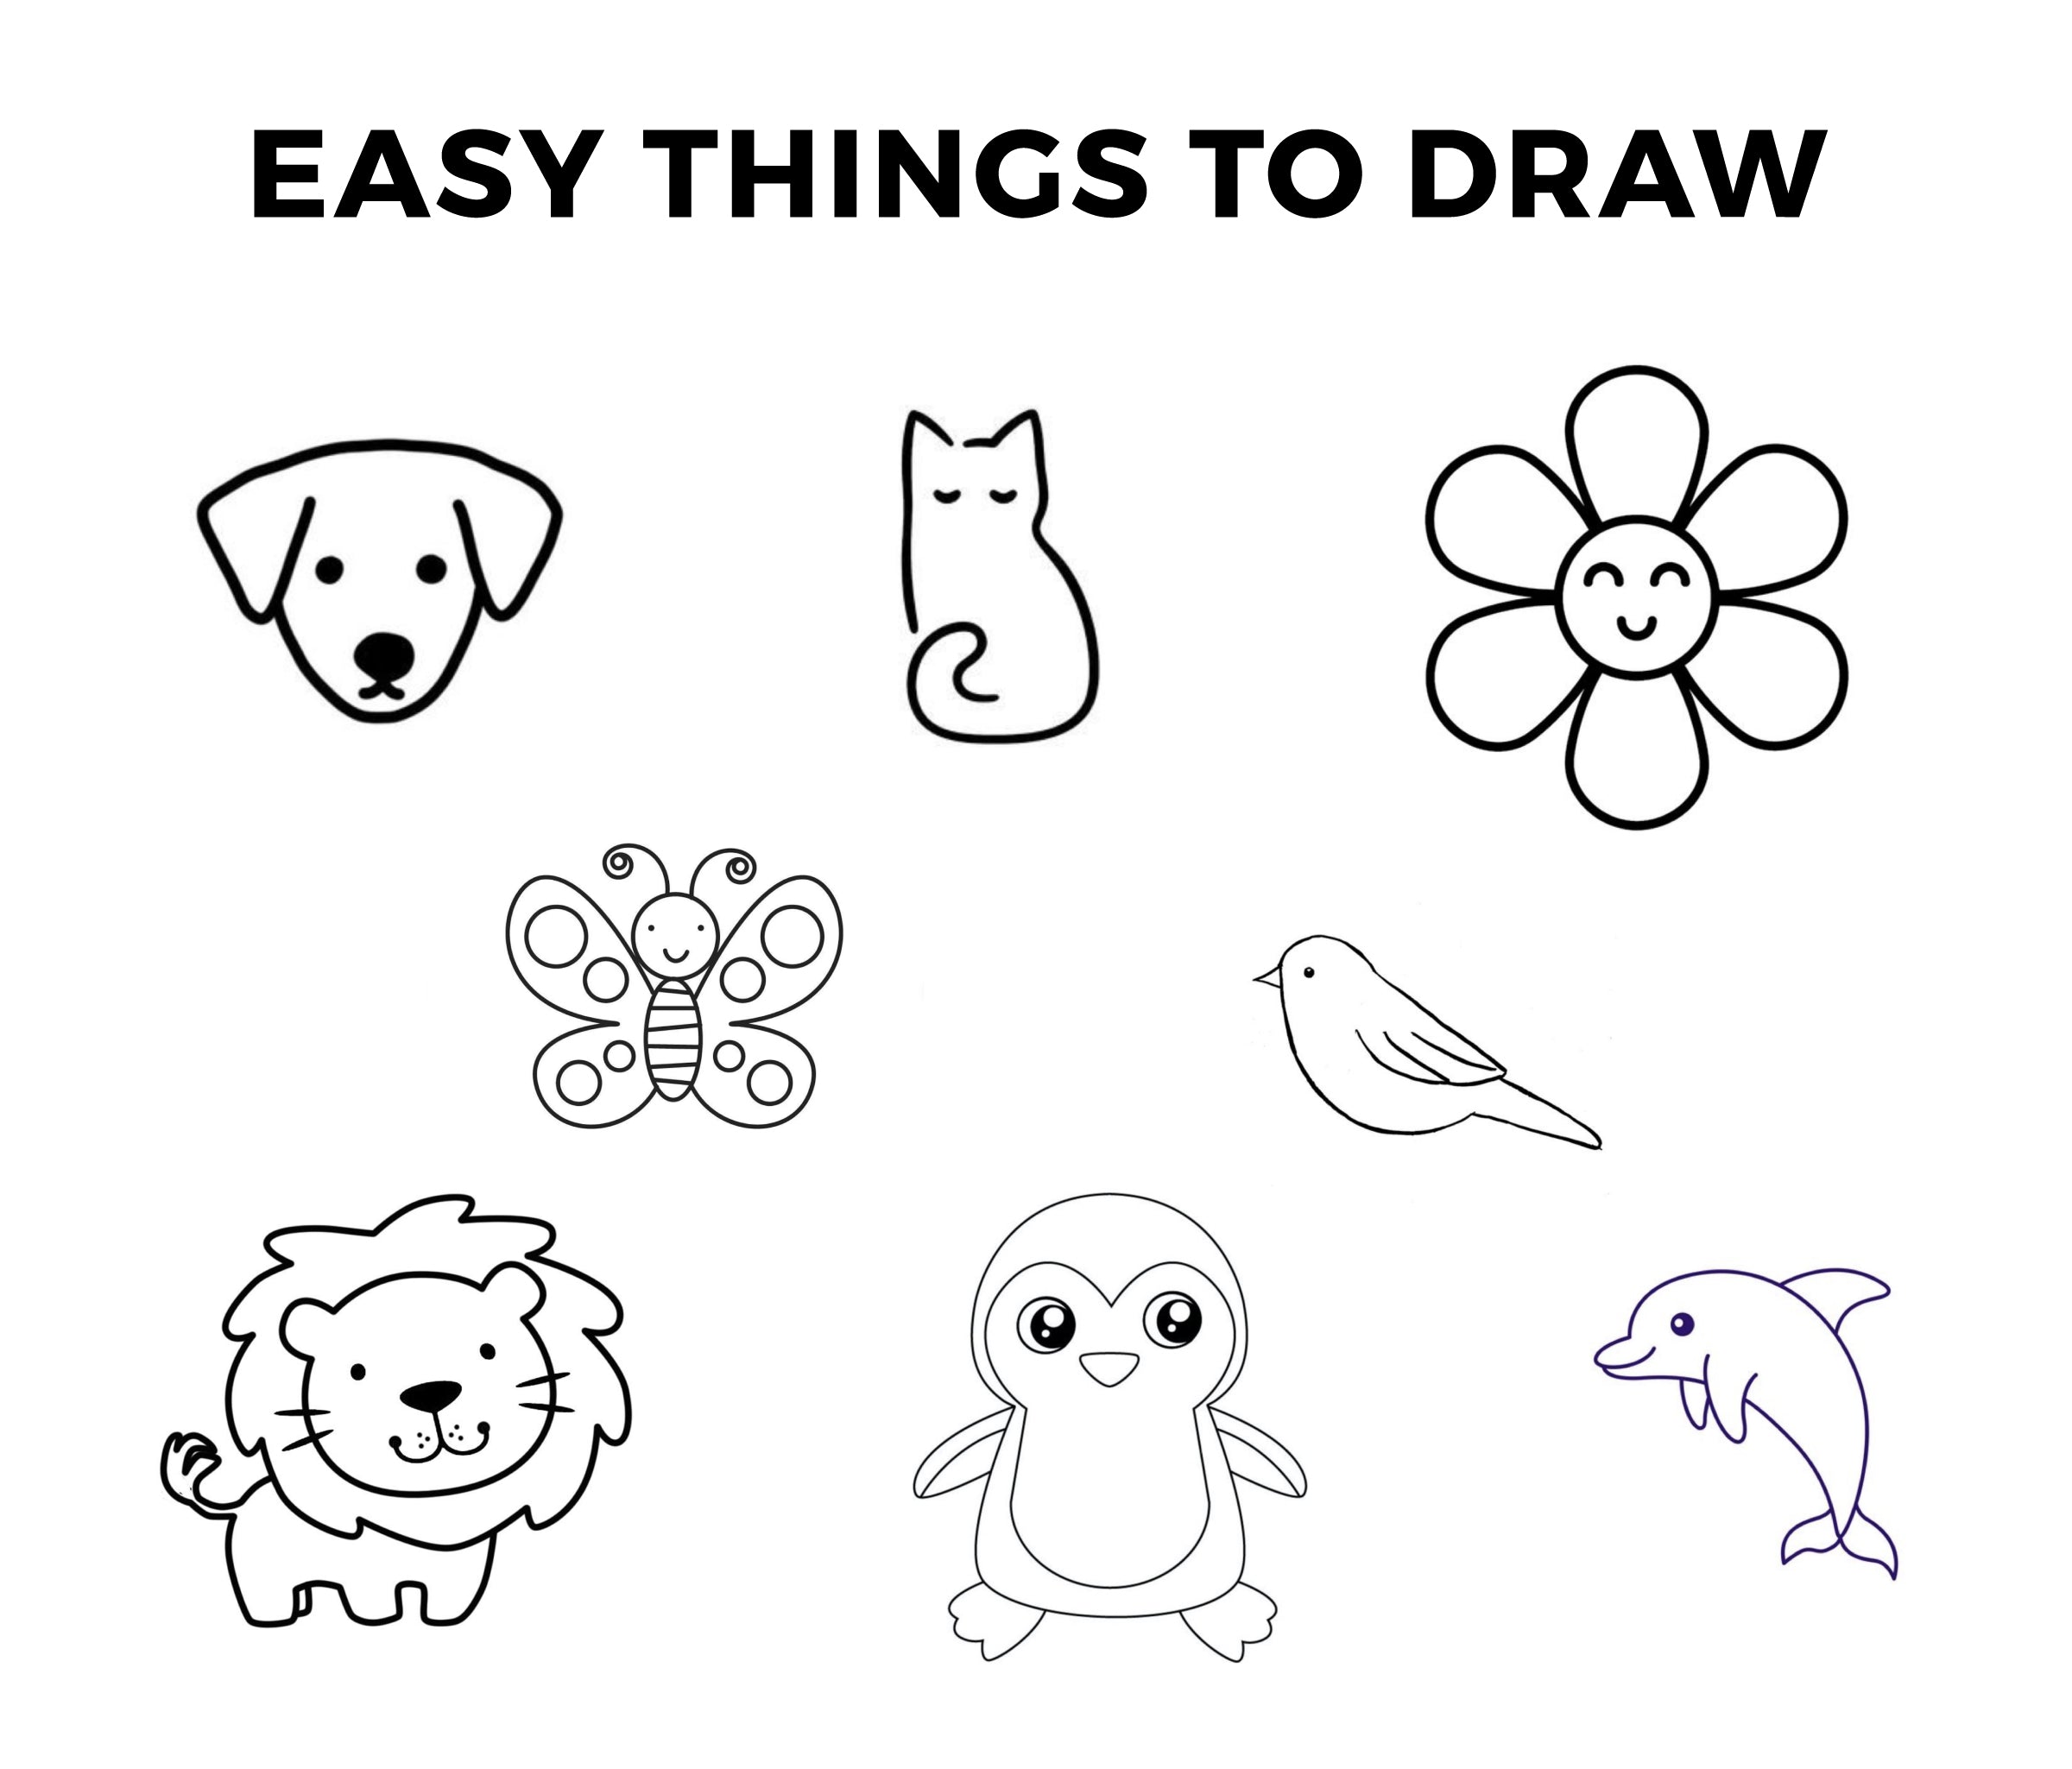 Drawing Ideas - Cool drawing ideas - Medium